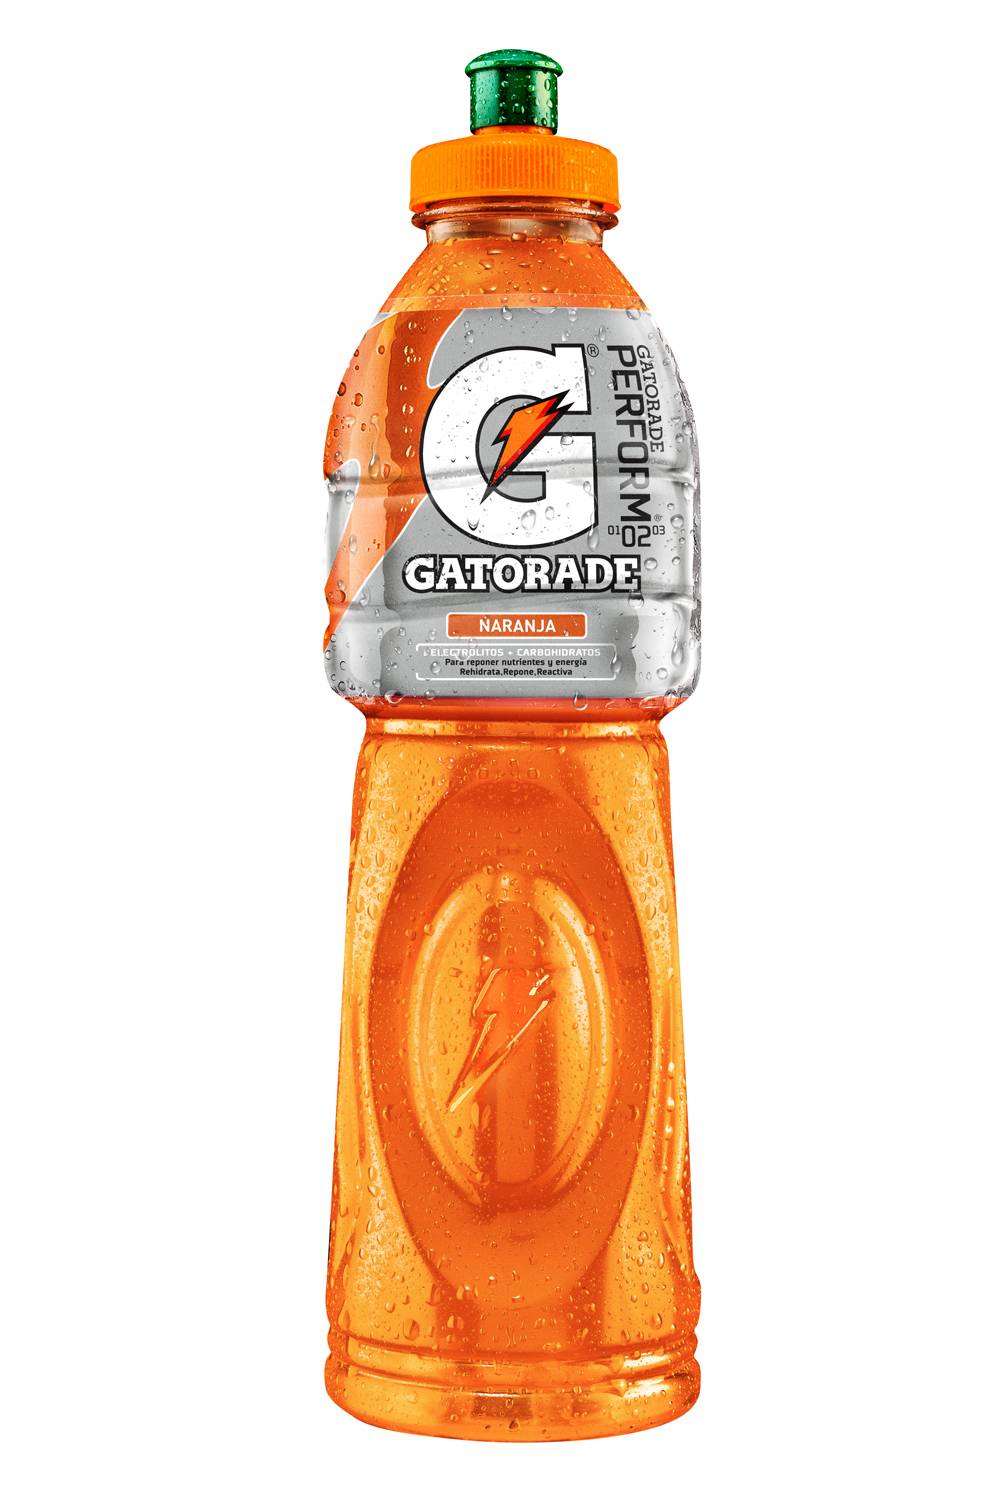  - Gatorade Naranja 750 ml